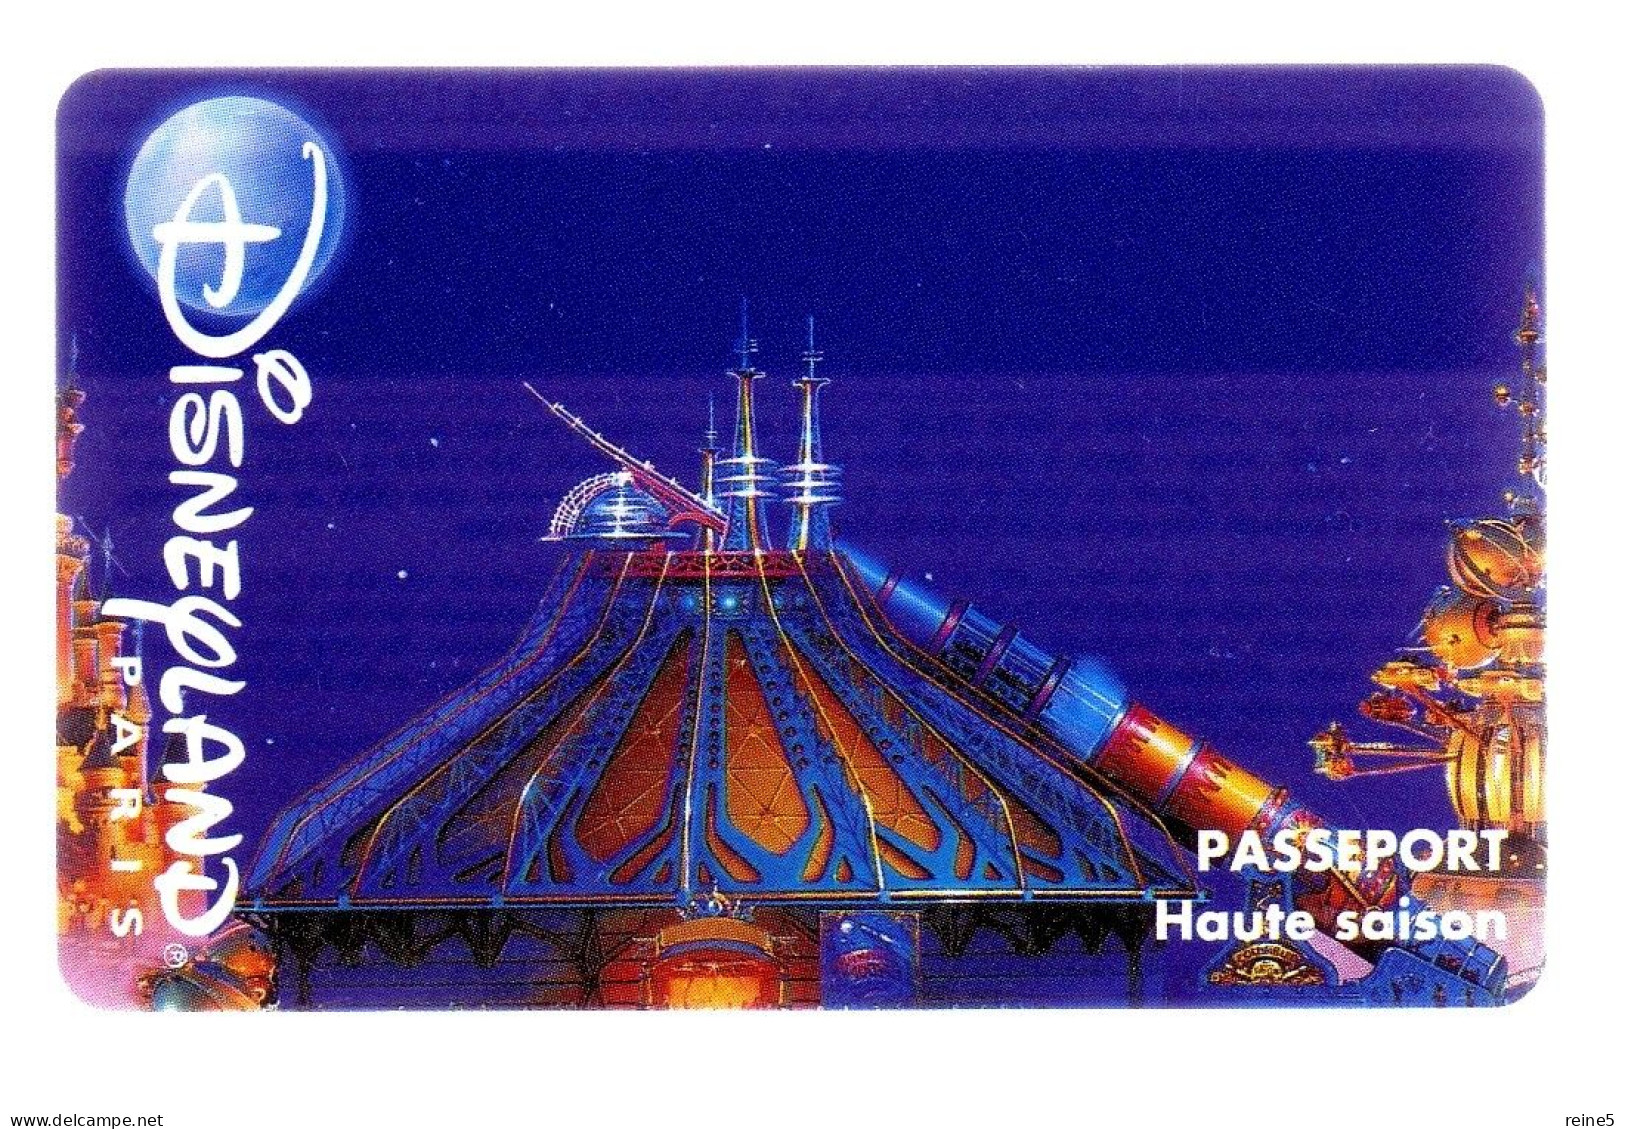 PASSEPORT HAUTE SAISON DISNEYLAND PARIS -TRES BON ETAT -REF-PASS DISNEY-15 - Passaporti  Disney